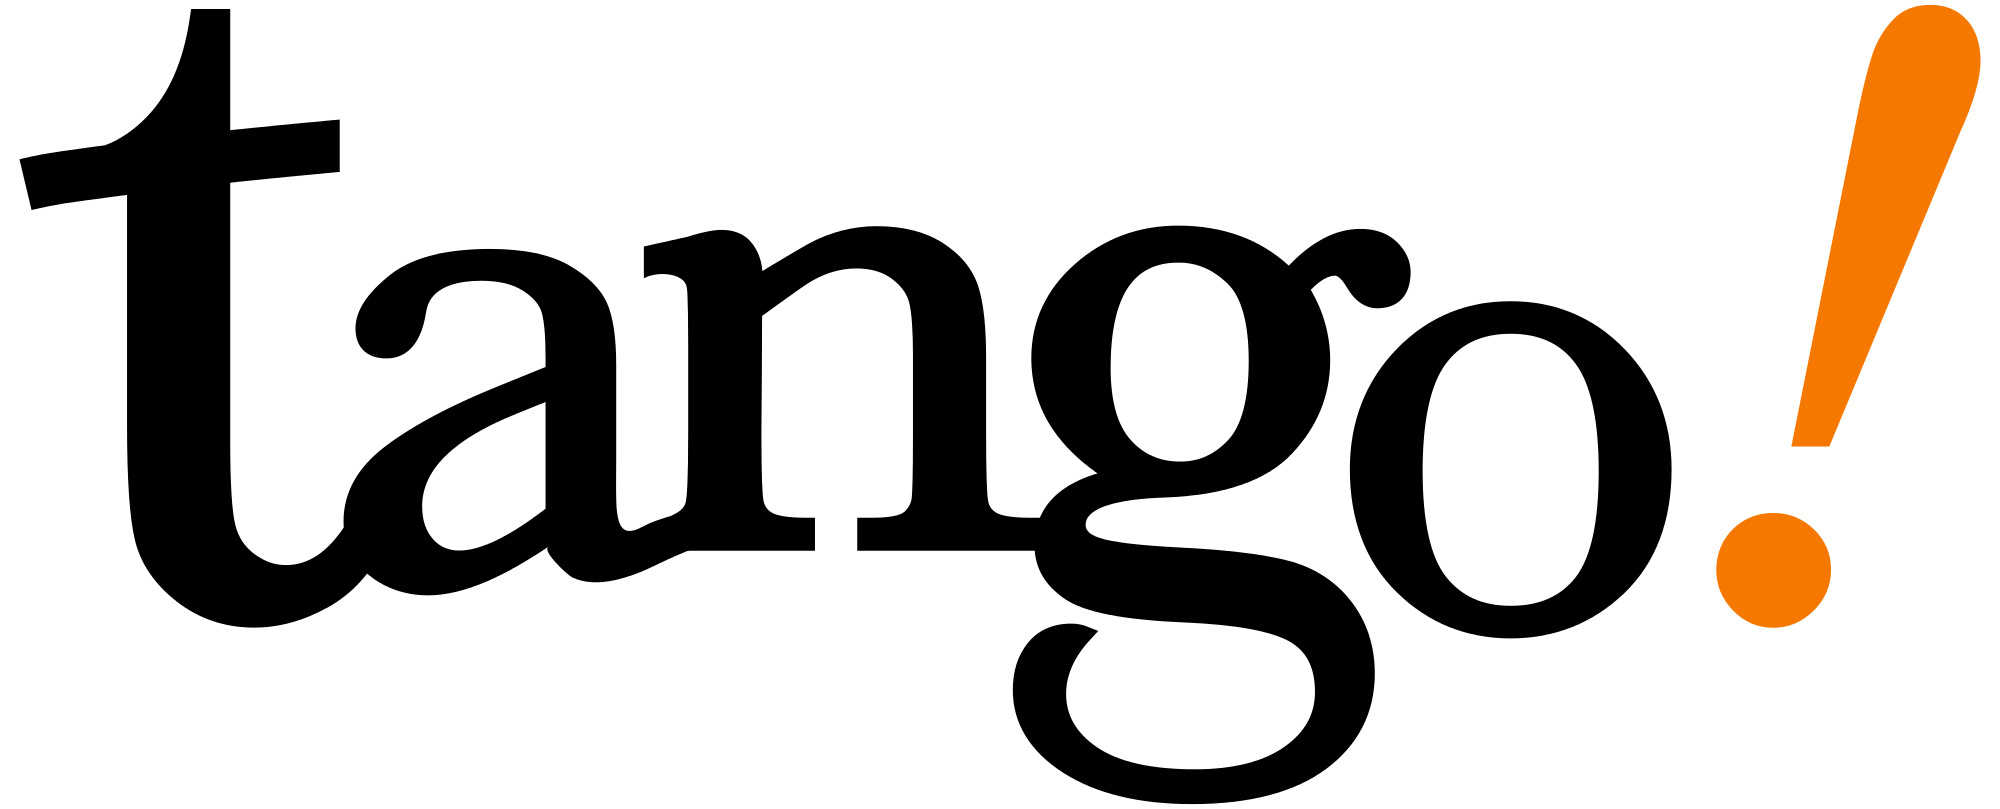 Tango Logo - Tango Logo Bw.svg